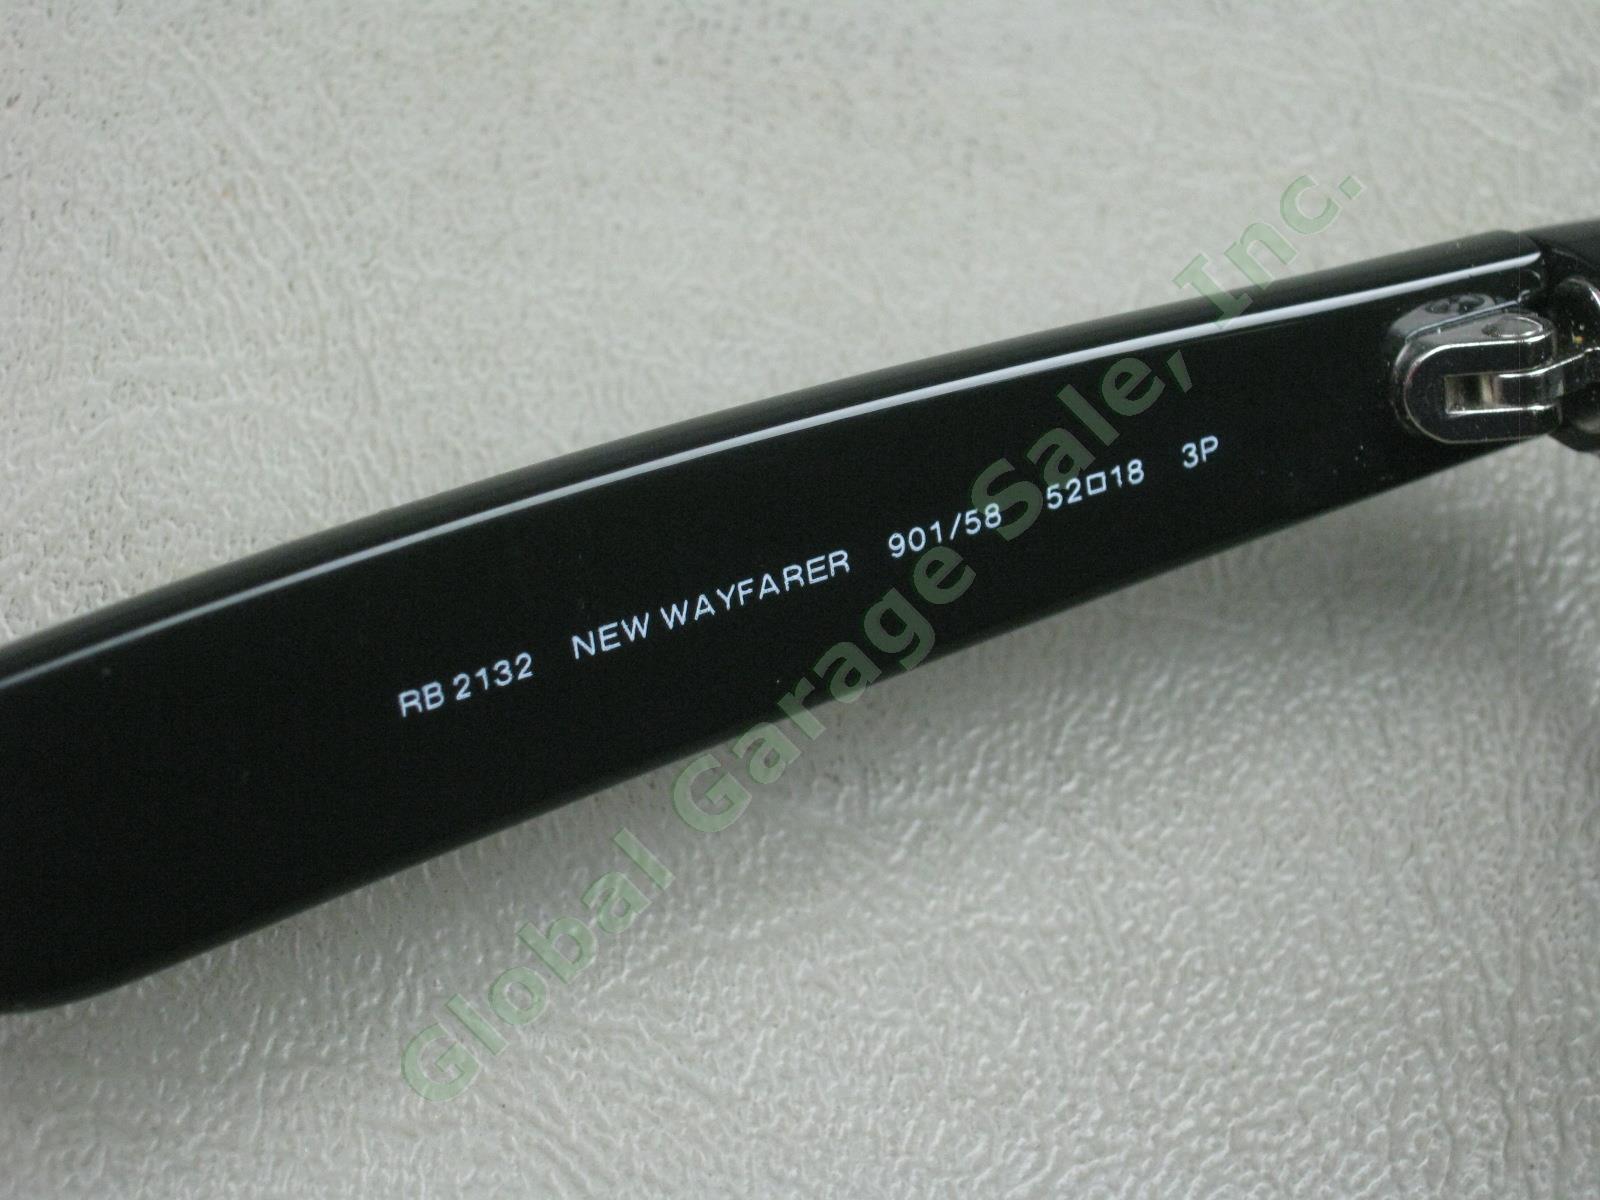 Ray-Ban RB2132 901/58 New Wayfarer Polarized Sunglasses Black Frame Green Lens 4